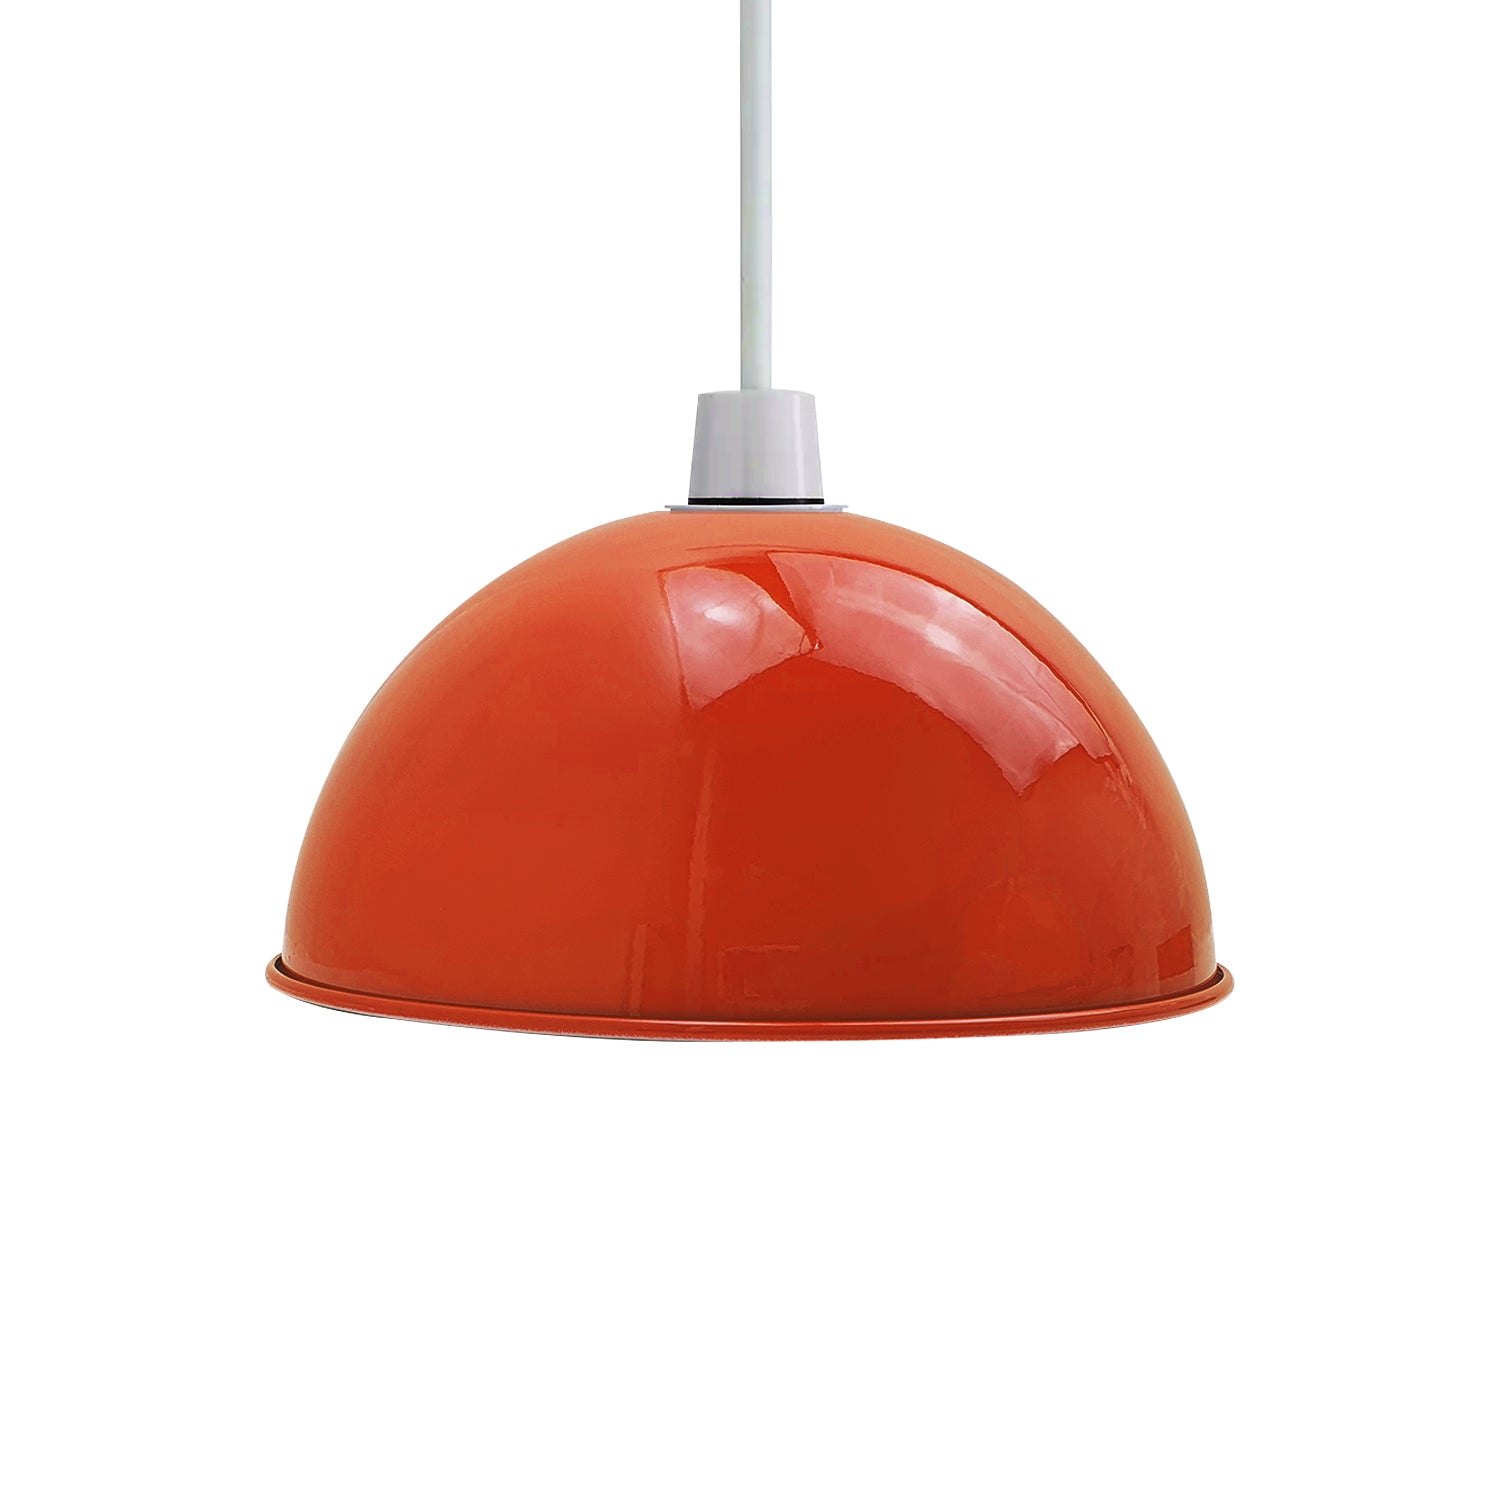 Orange Metal Cylinder Dome Light Shade Lamp shade ceiling light~1891